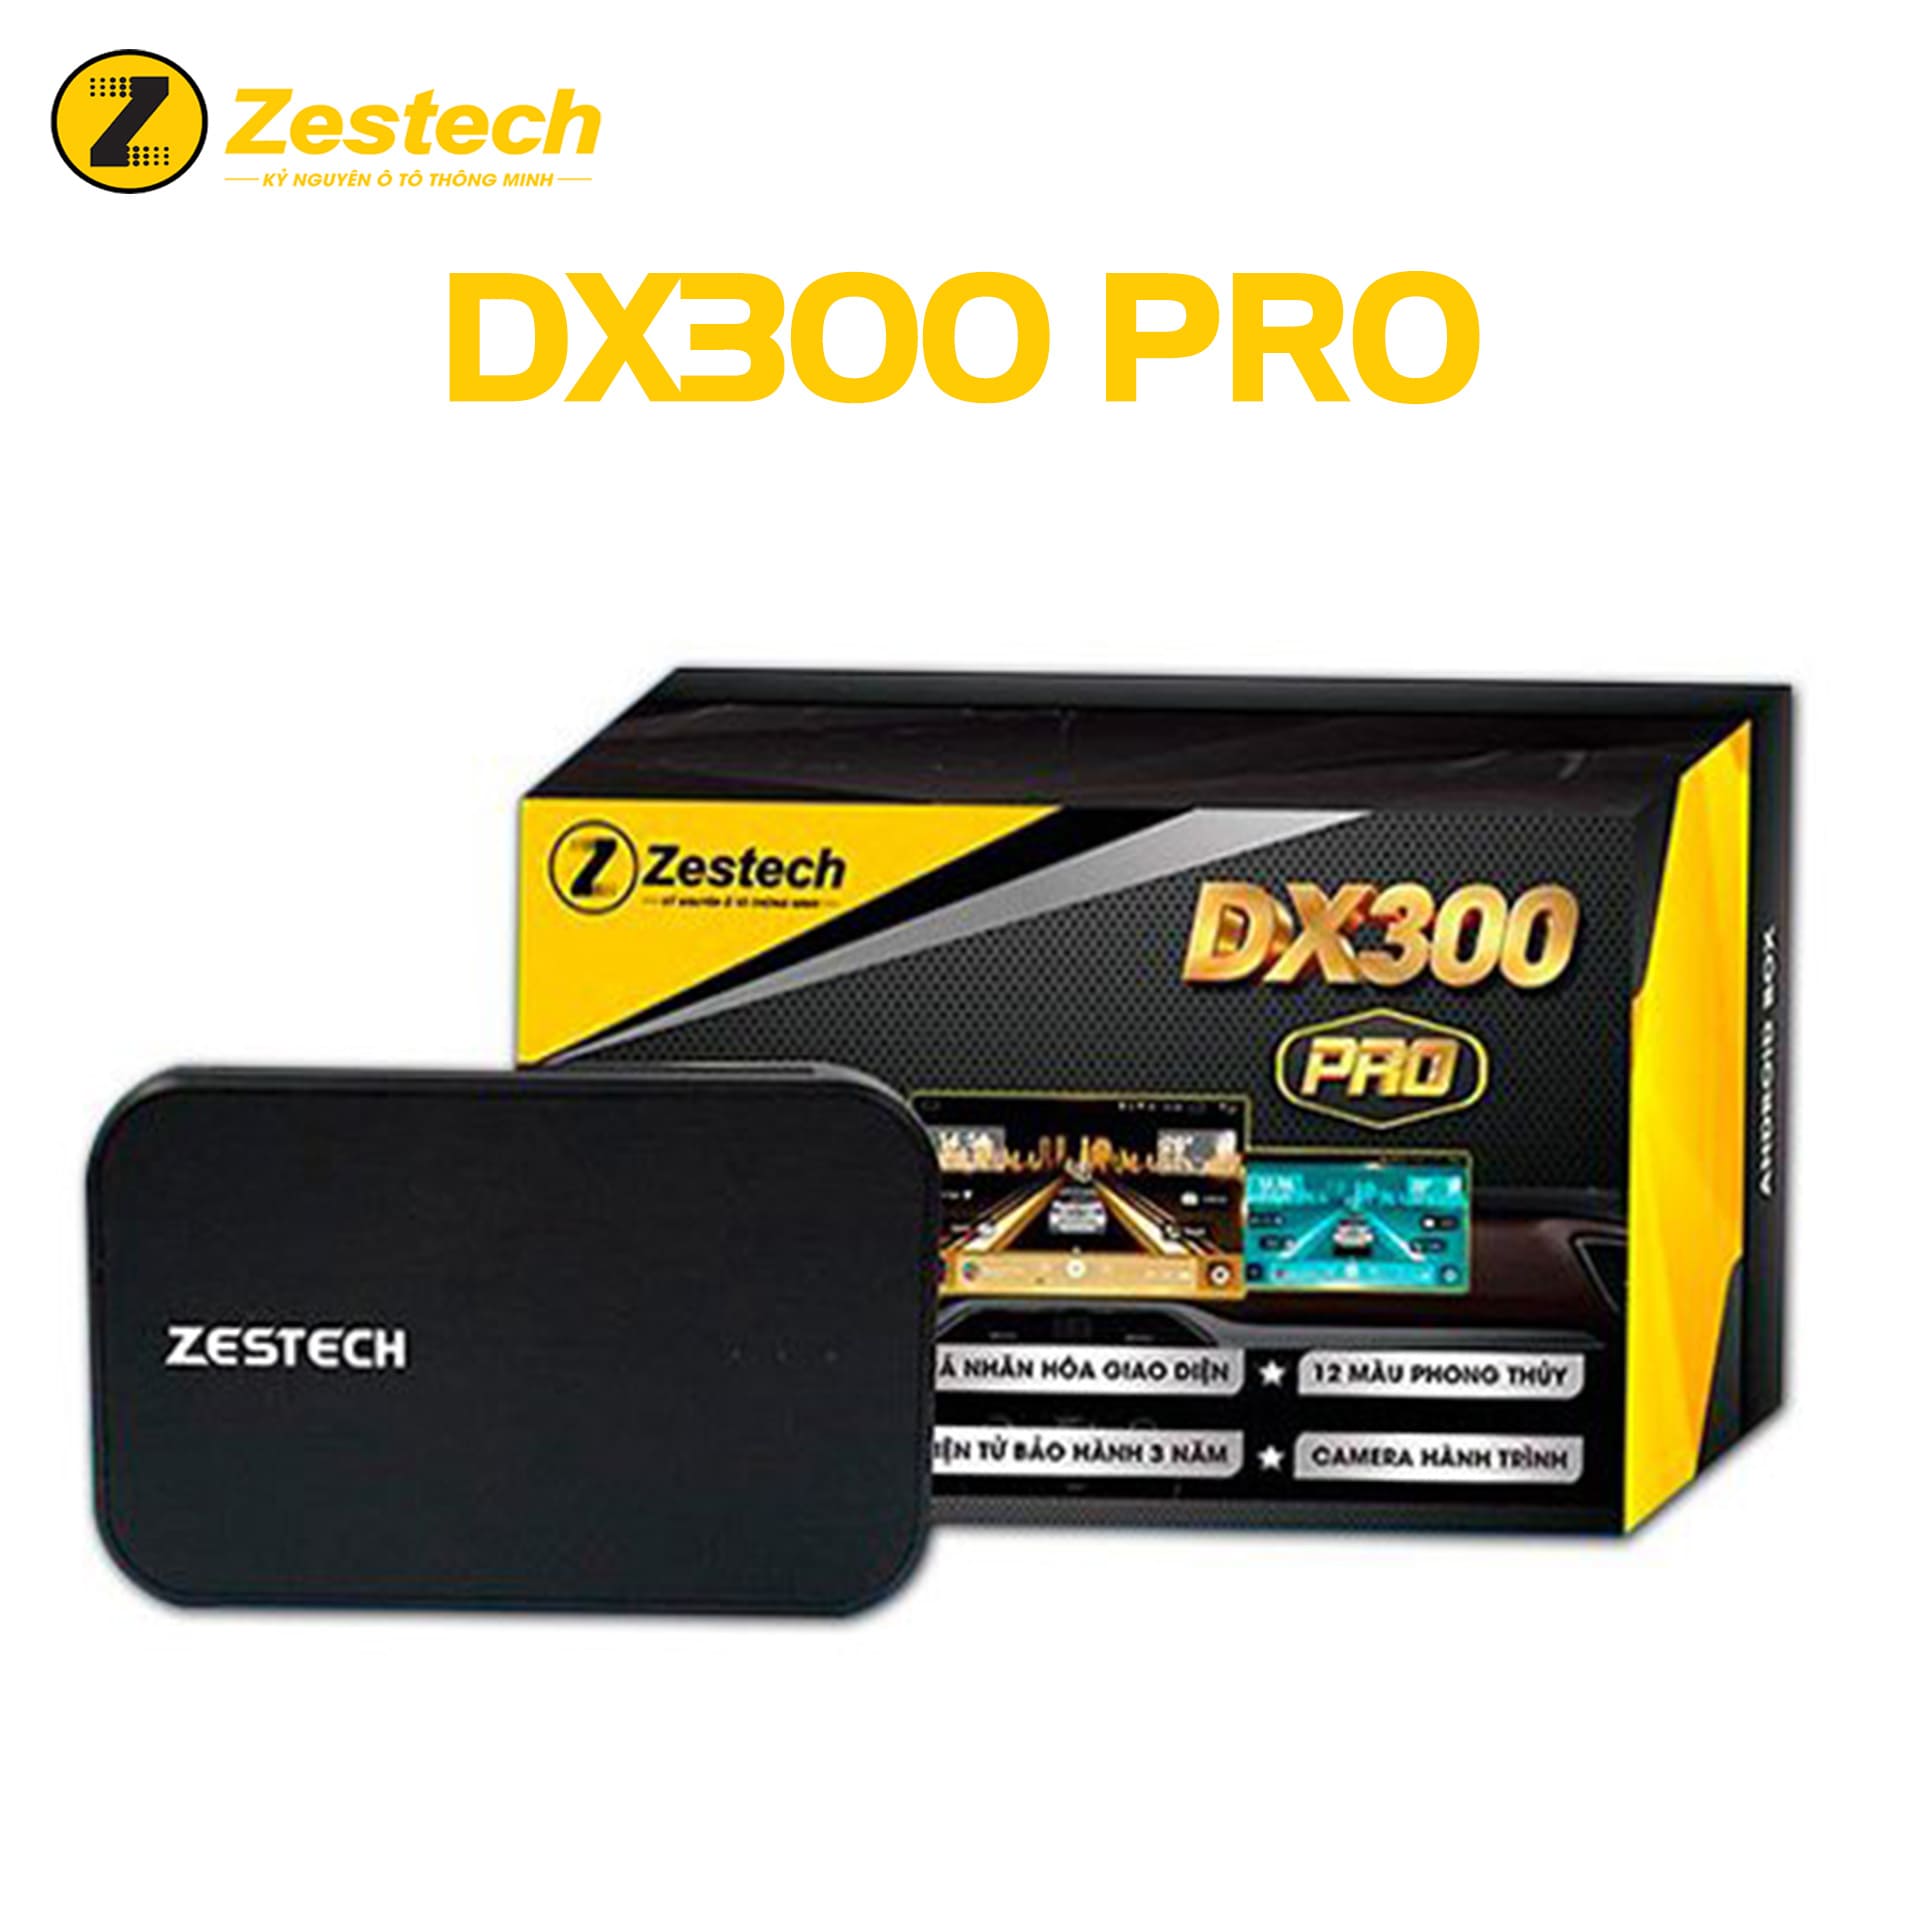 ANDROID BOX ZESTECH DX300 PRO